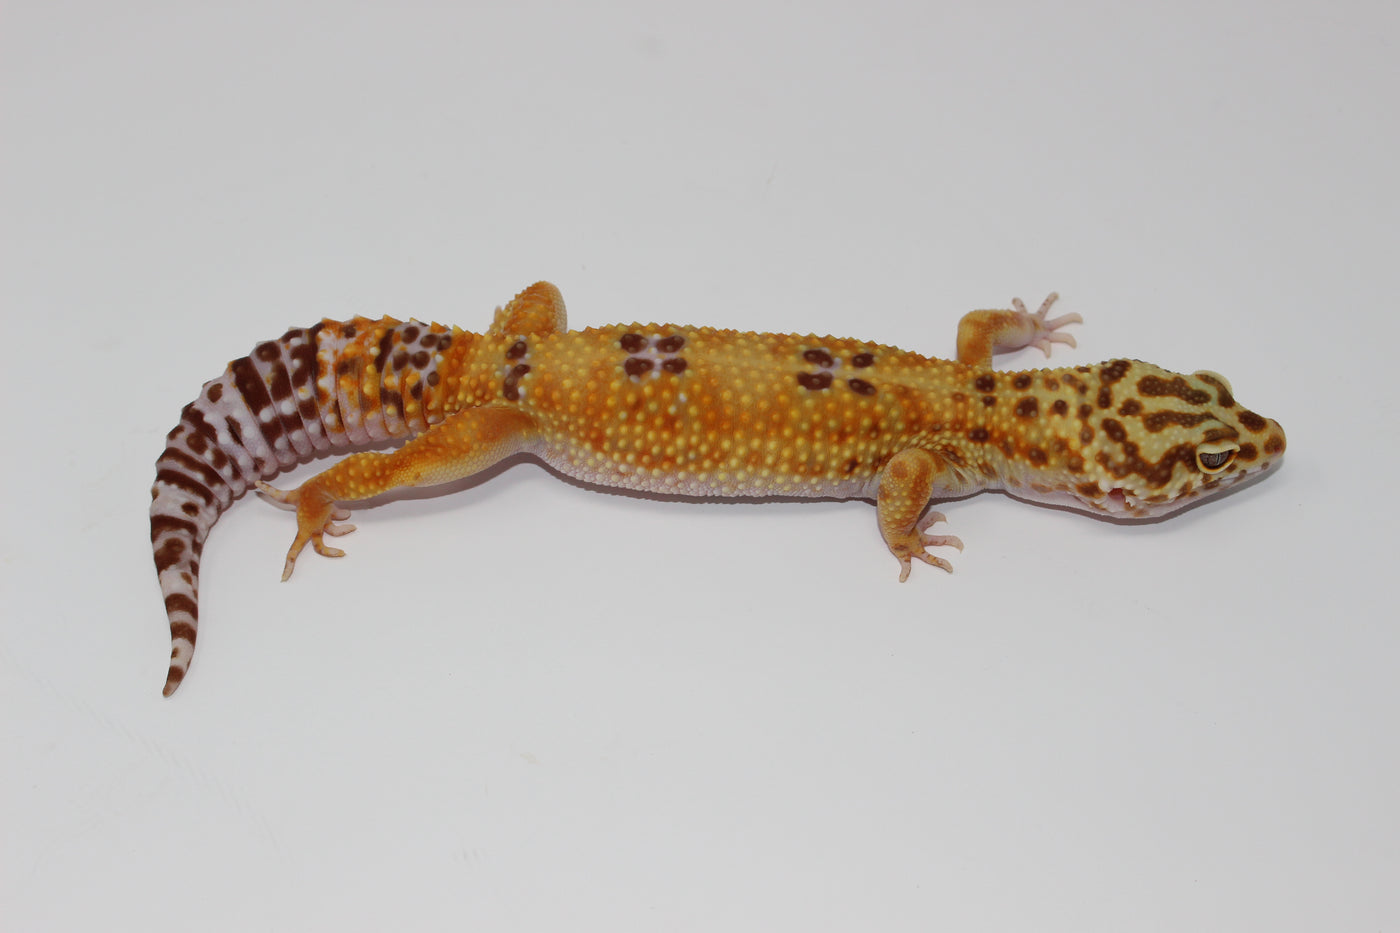 Tangerine Albino (Hybino) Leopard Gecko Adult